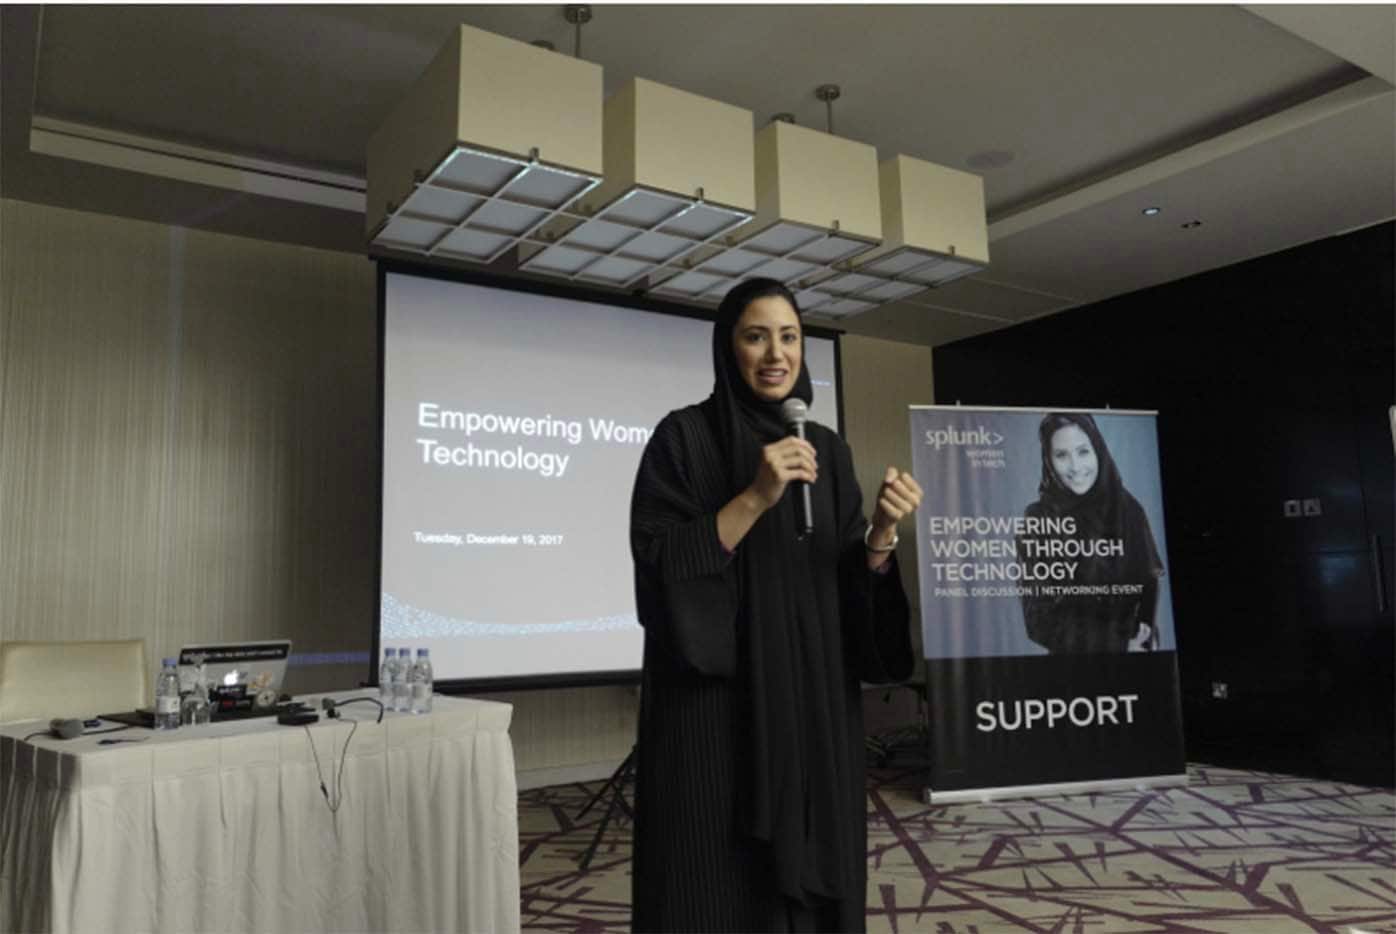 Empowering Women Through Technology opening